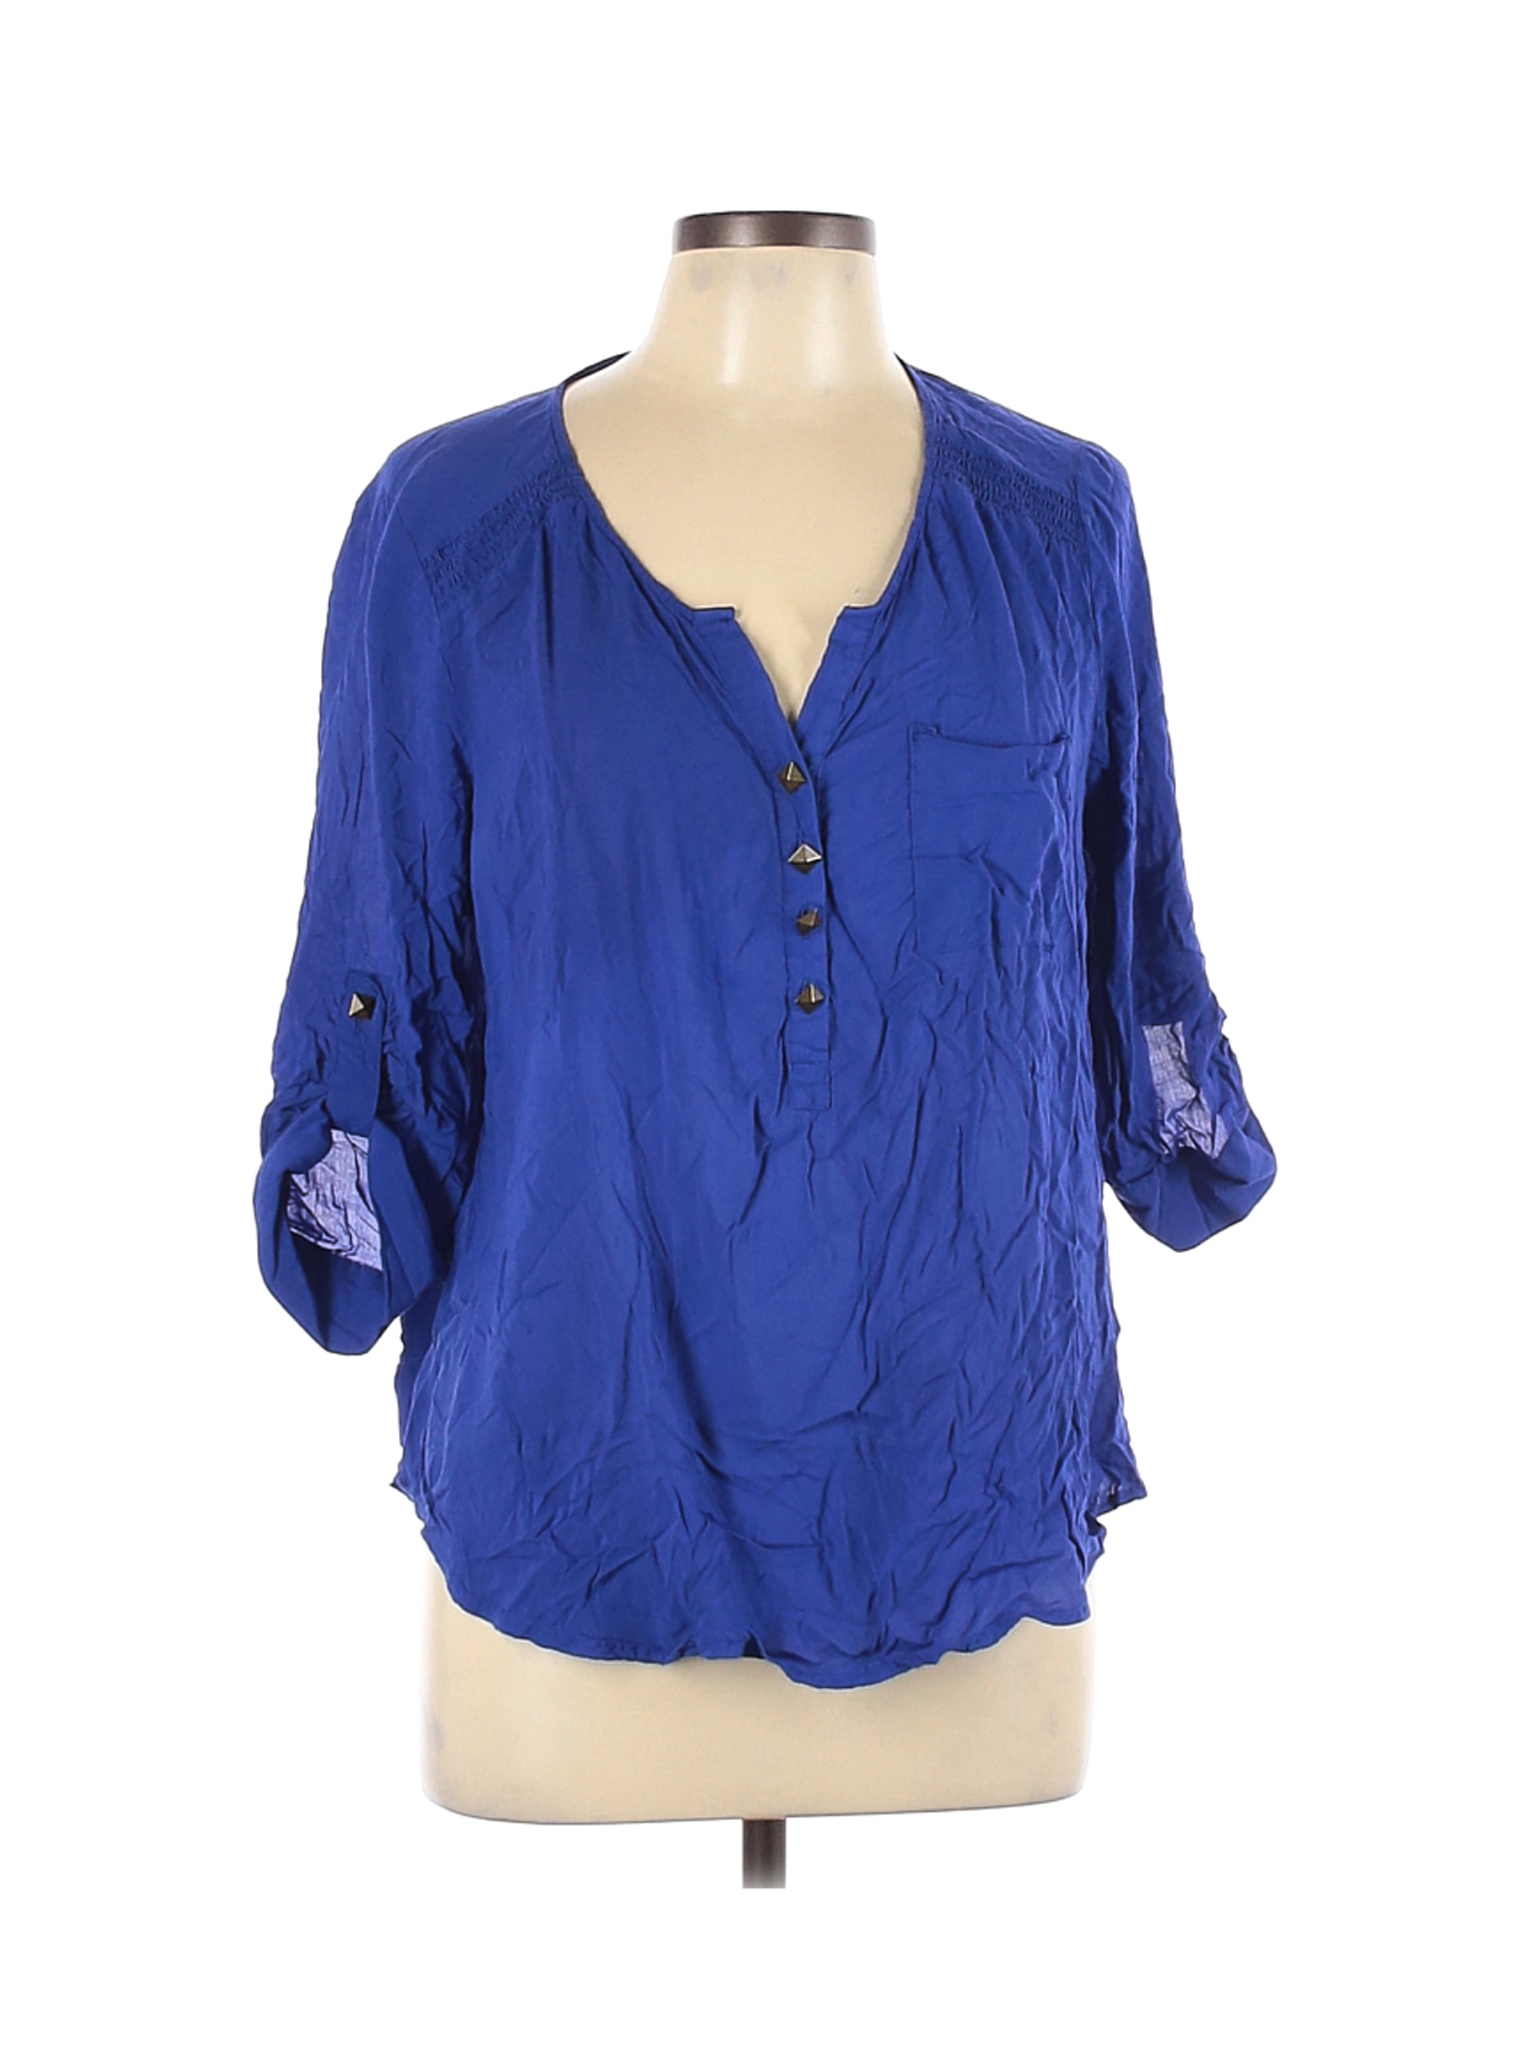 Torrid Women Blue Long Sleeve Blouse L Plus | eBay